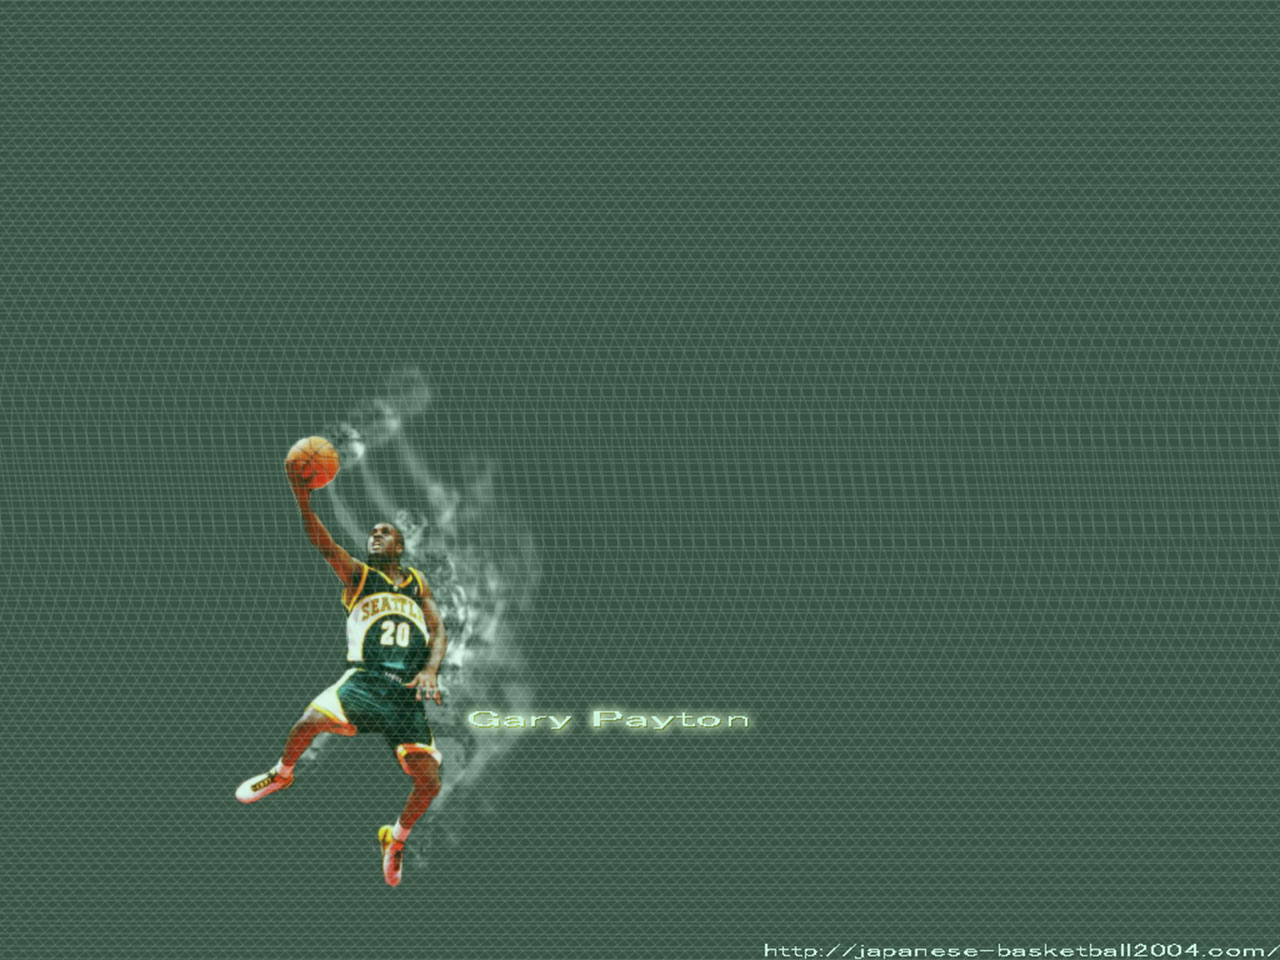 Gary Payton SuperSonics Wallpaper | Basketball Wallpapers at ...